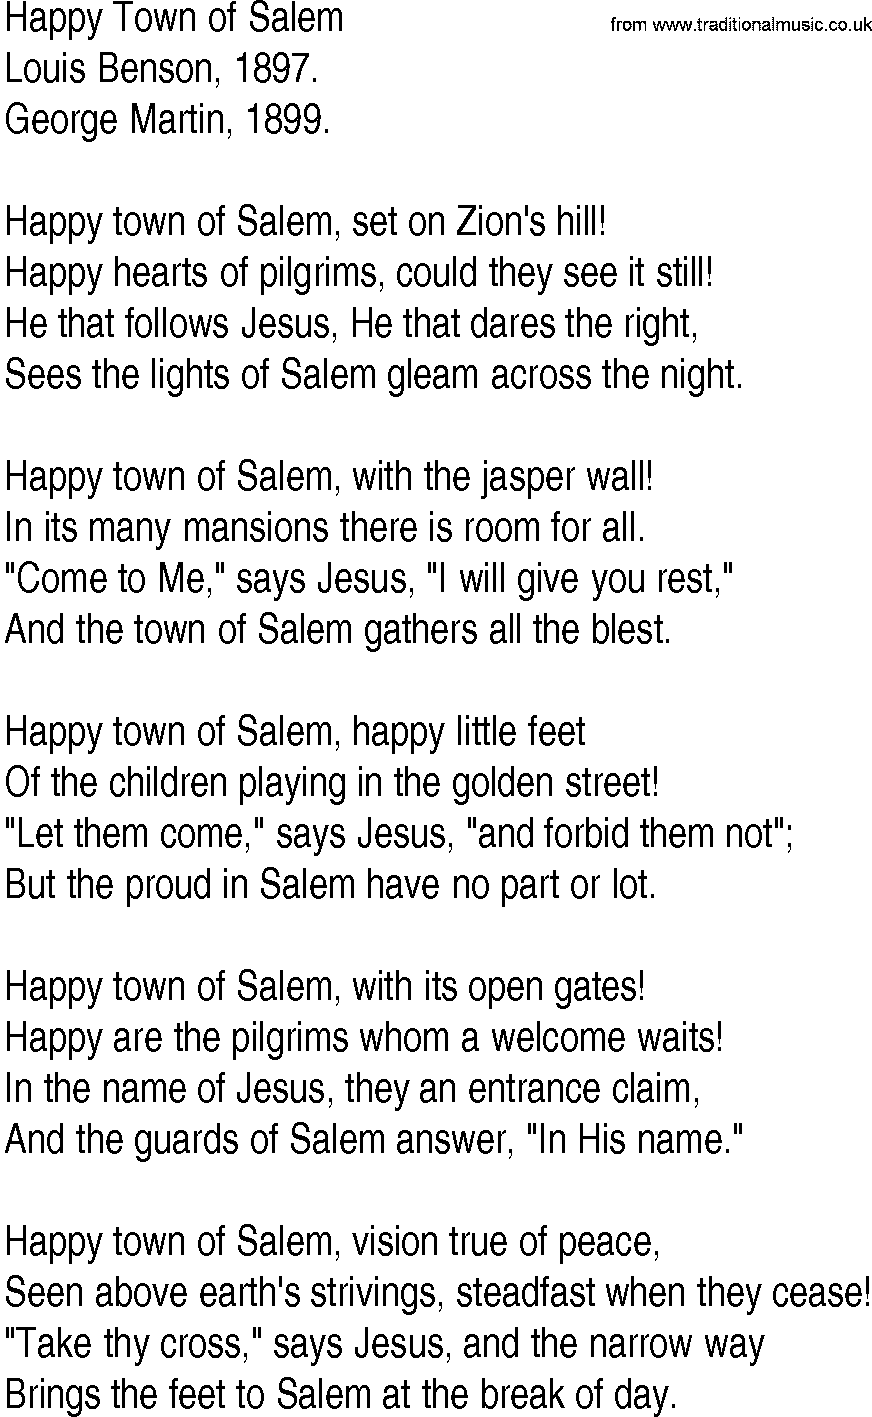 Hymn and Gospel Song: Happy Town of Salem by Louis Benson lyrics